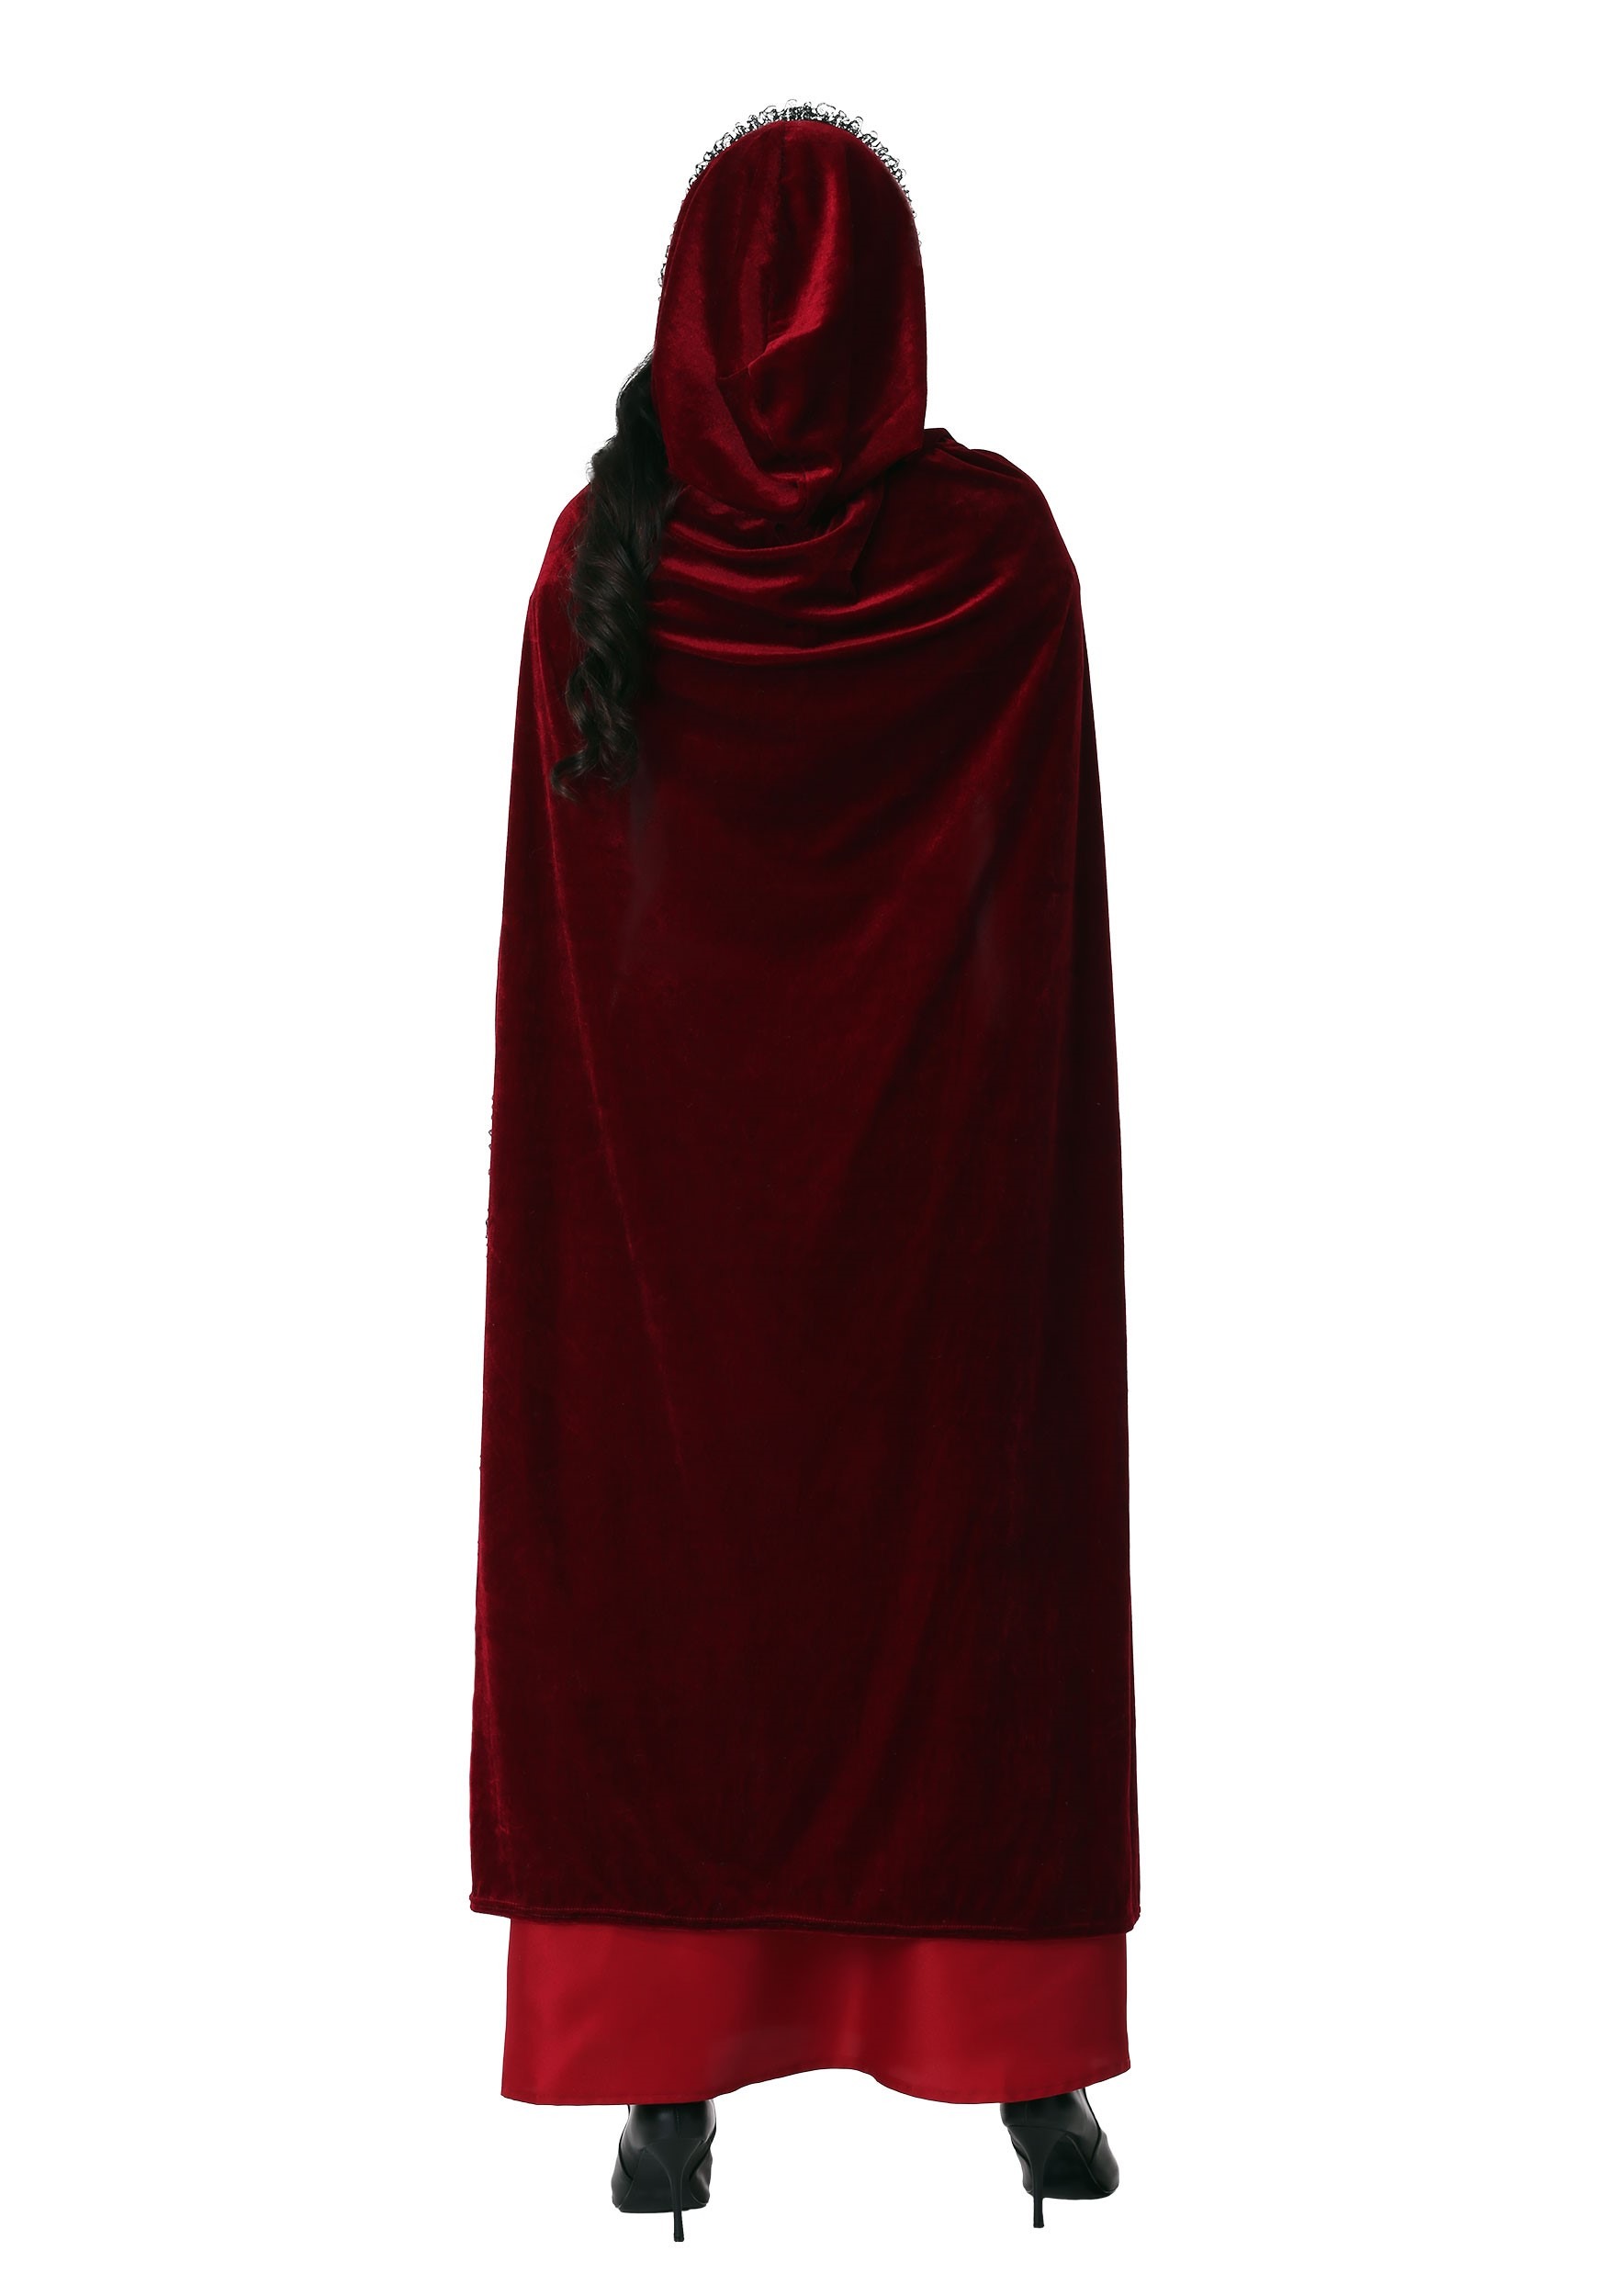 Ravishing Red Riding Hood Women's Fancy Dress Costume